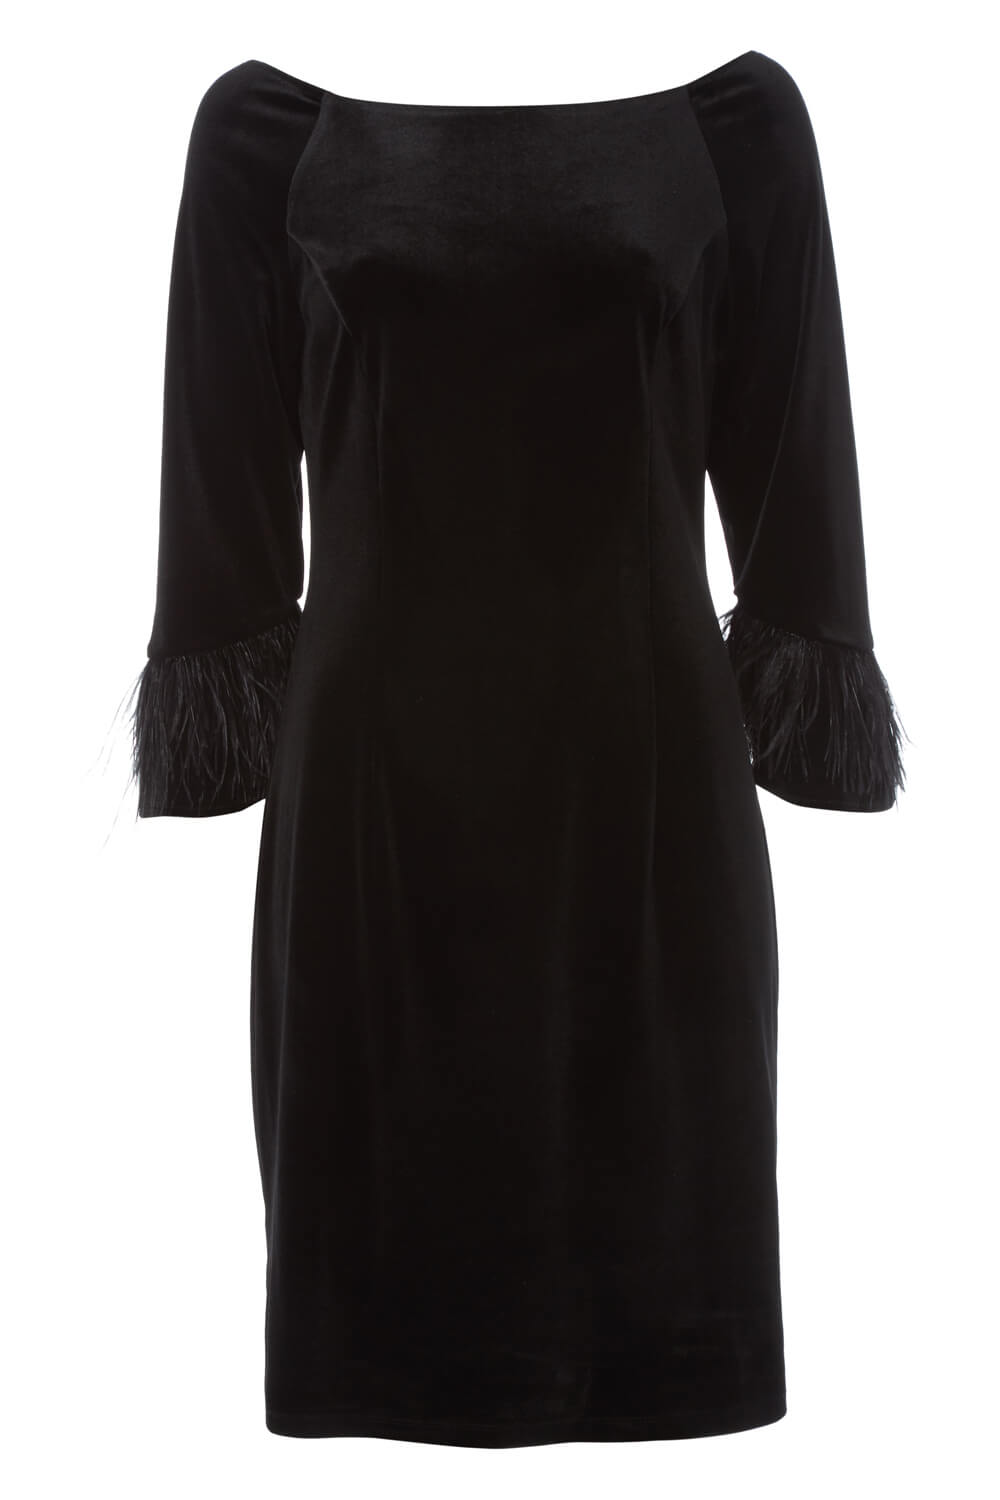 Black Velvet Feather Boat Neck Dress, Image 5 of 5